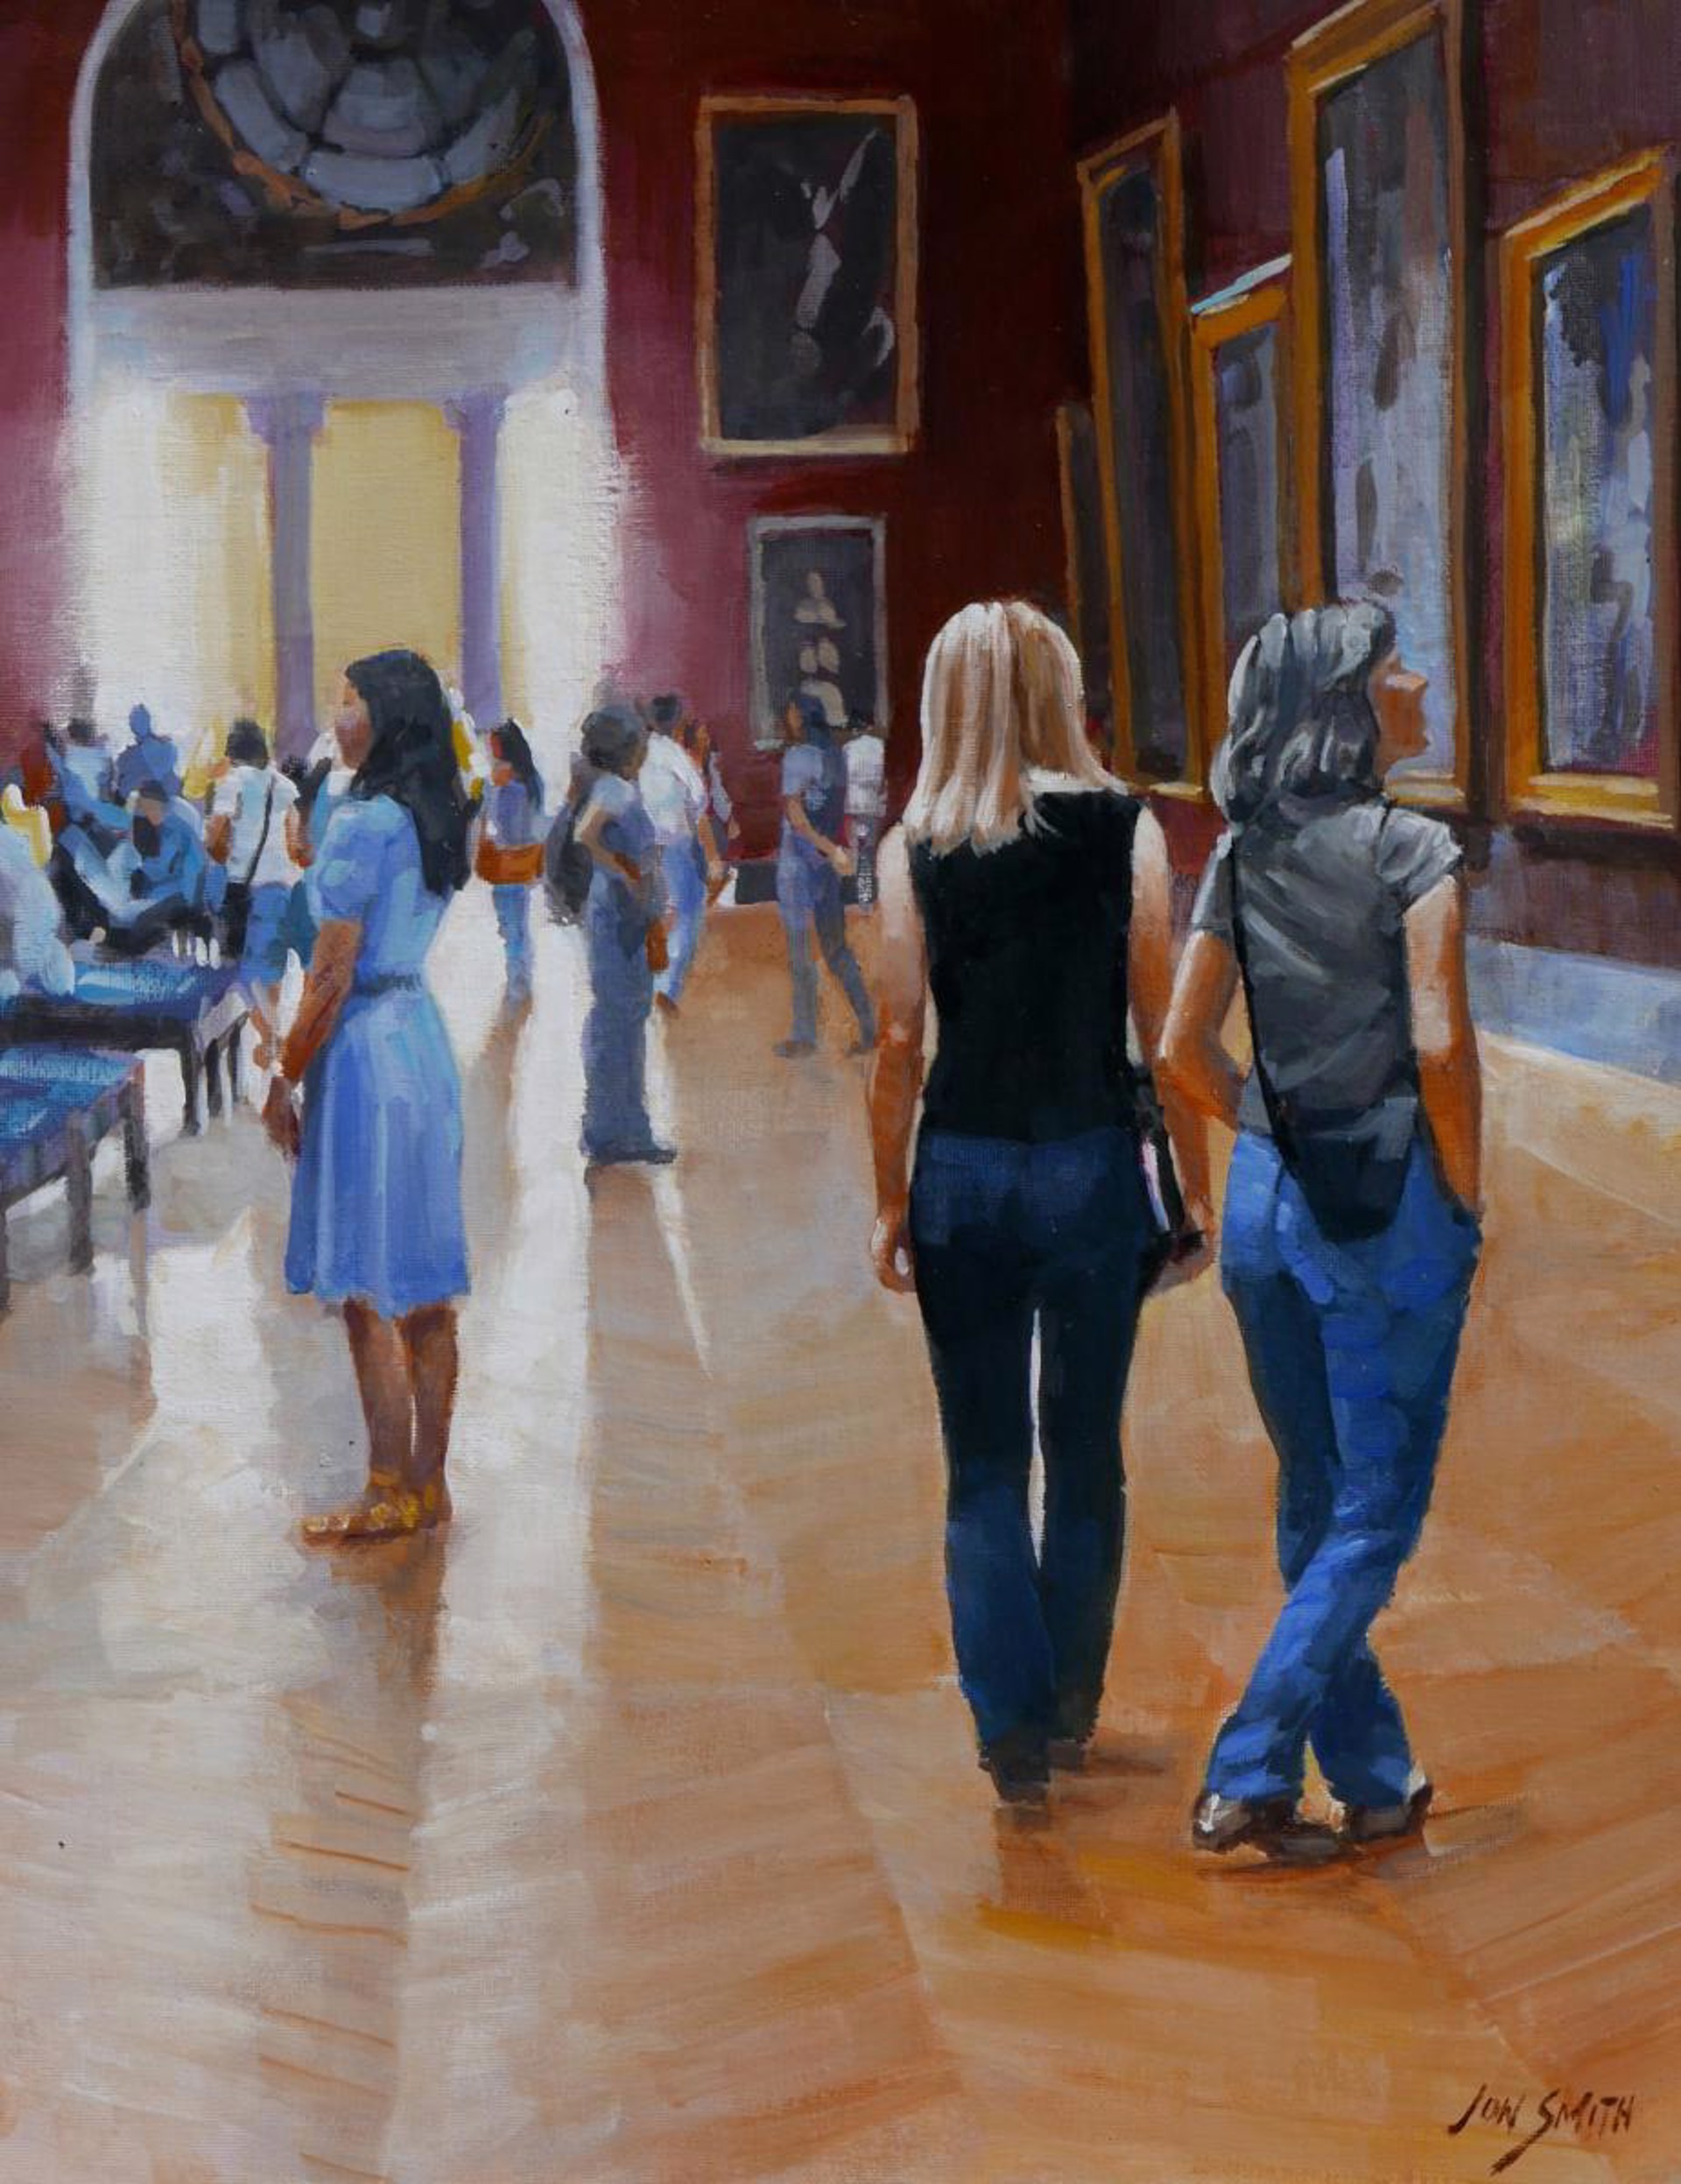 Friends in the Louvre by Jon Smith